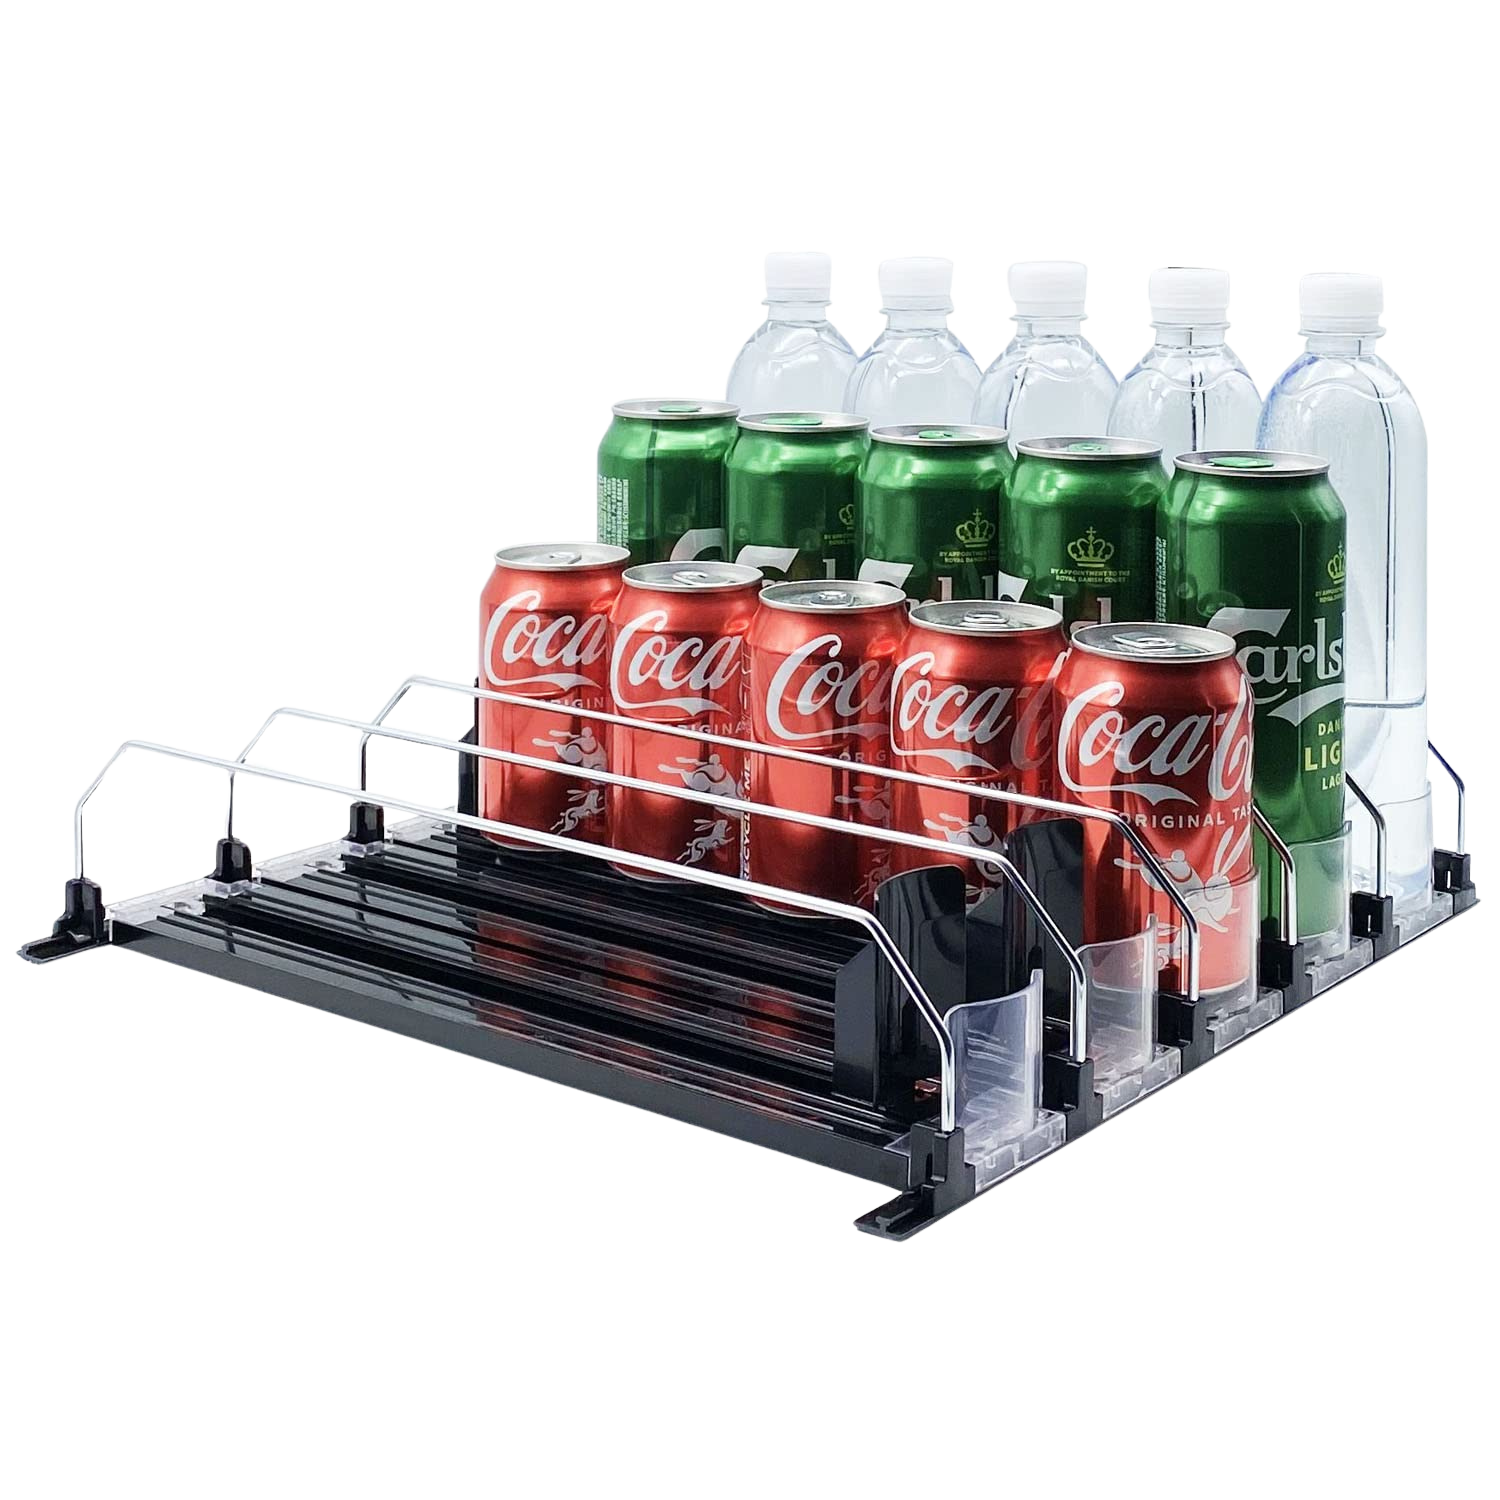 SZNLZQ Soda Can Organizer for Refrigerator